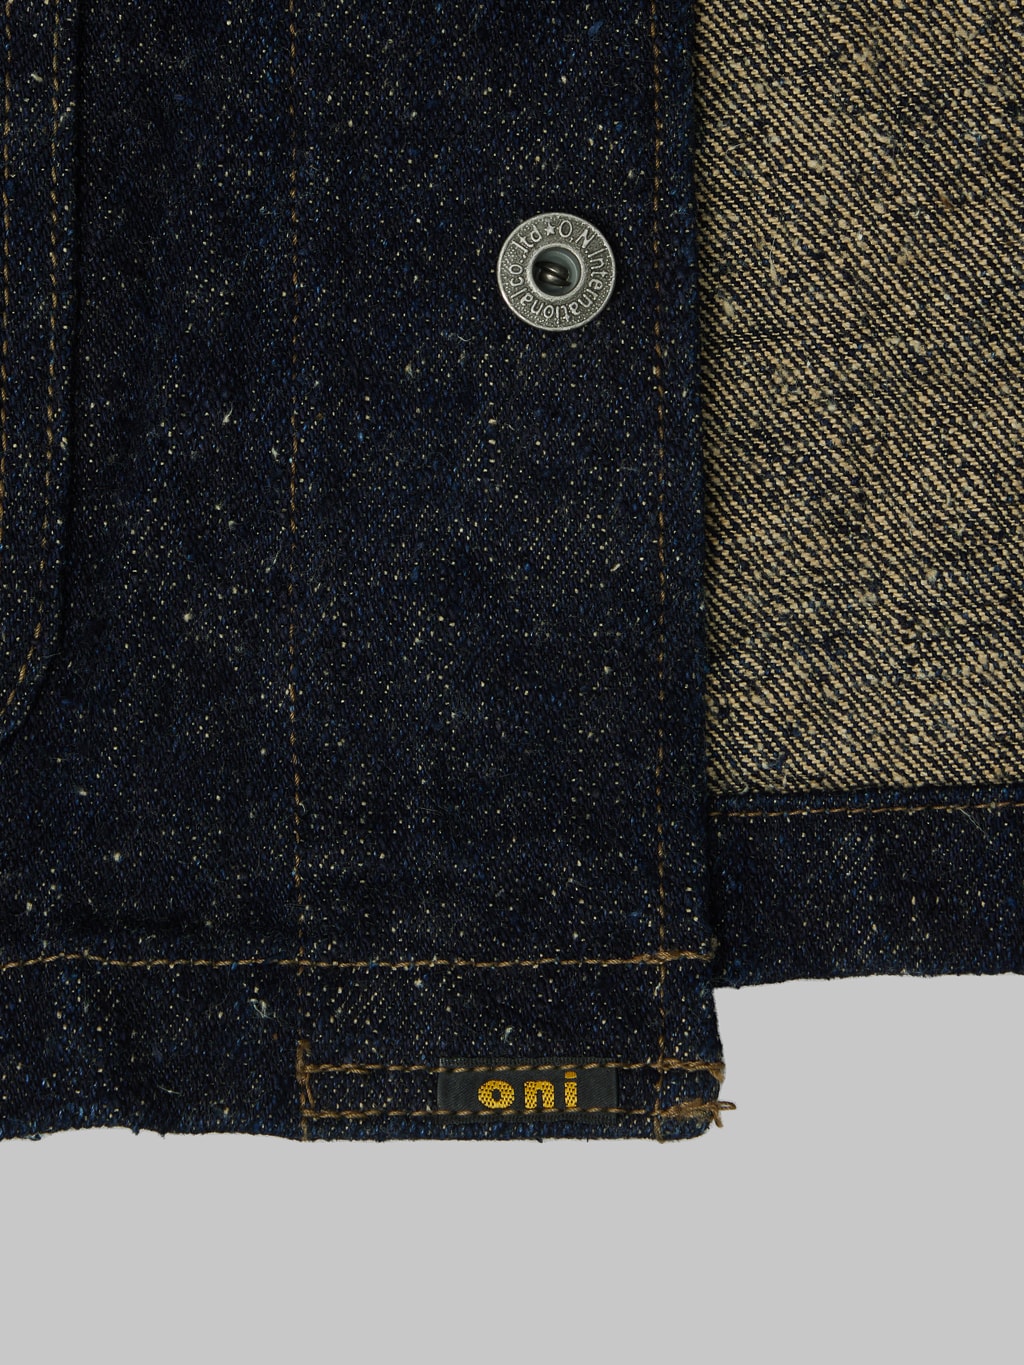 ONI Denim Asphalt 20oz Coverall jacket closeup